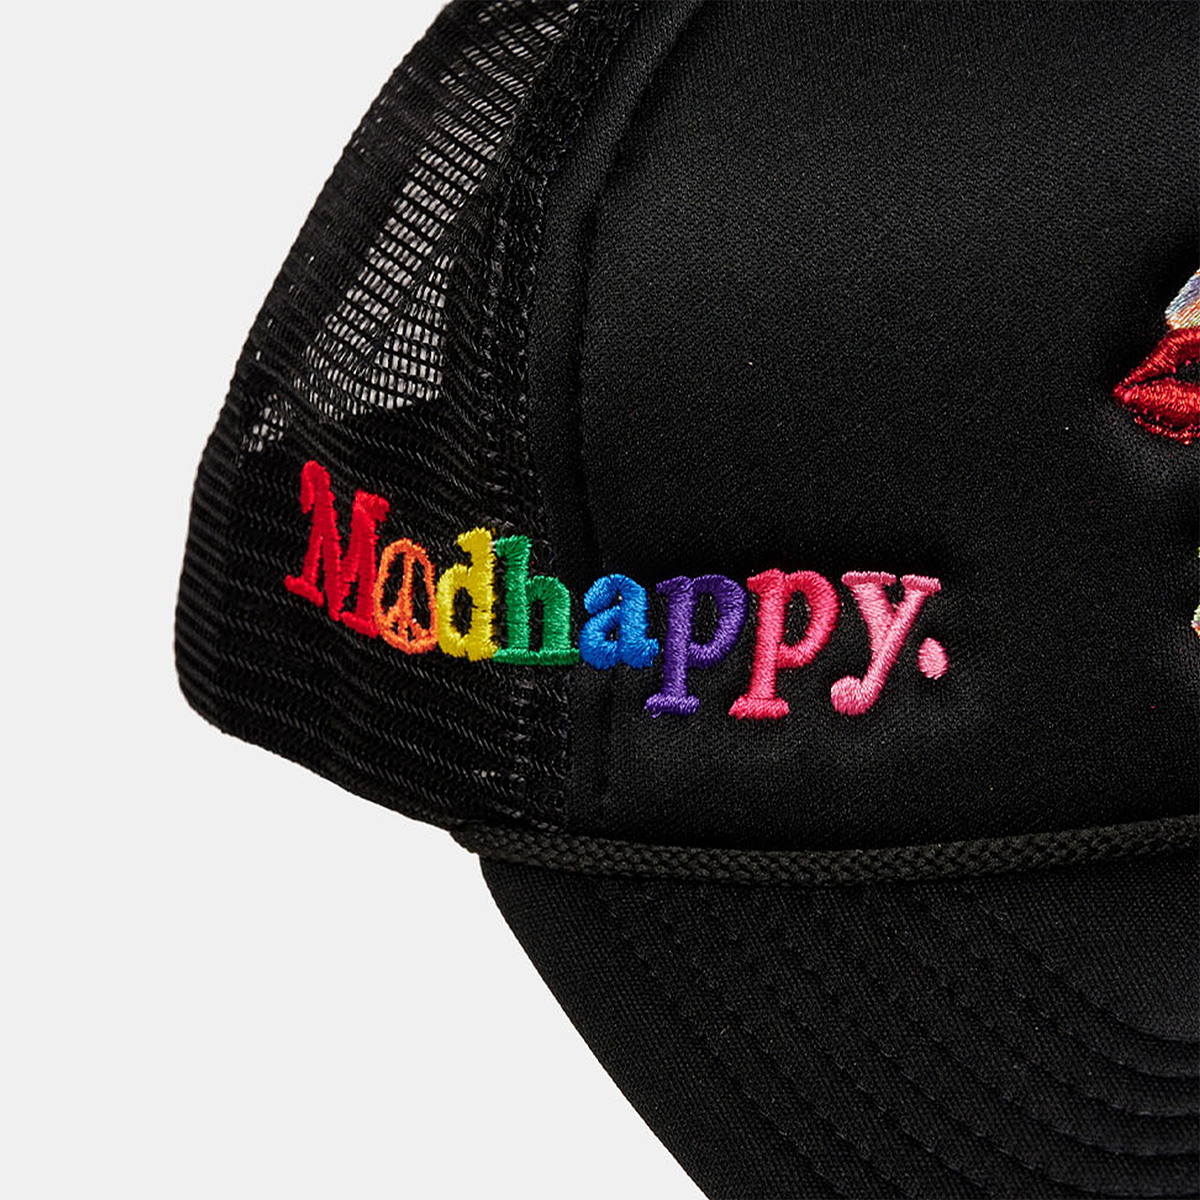 Madhappy New York hat